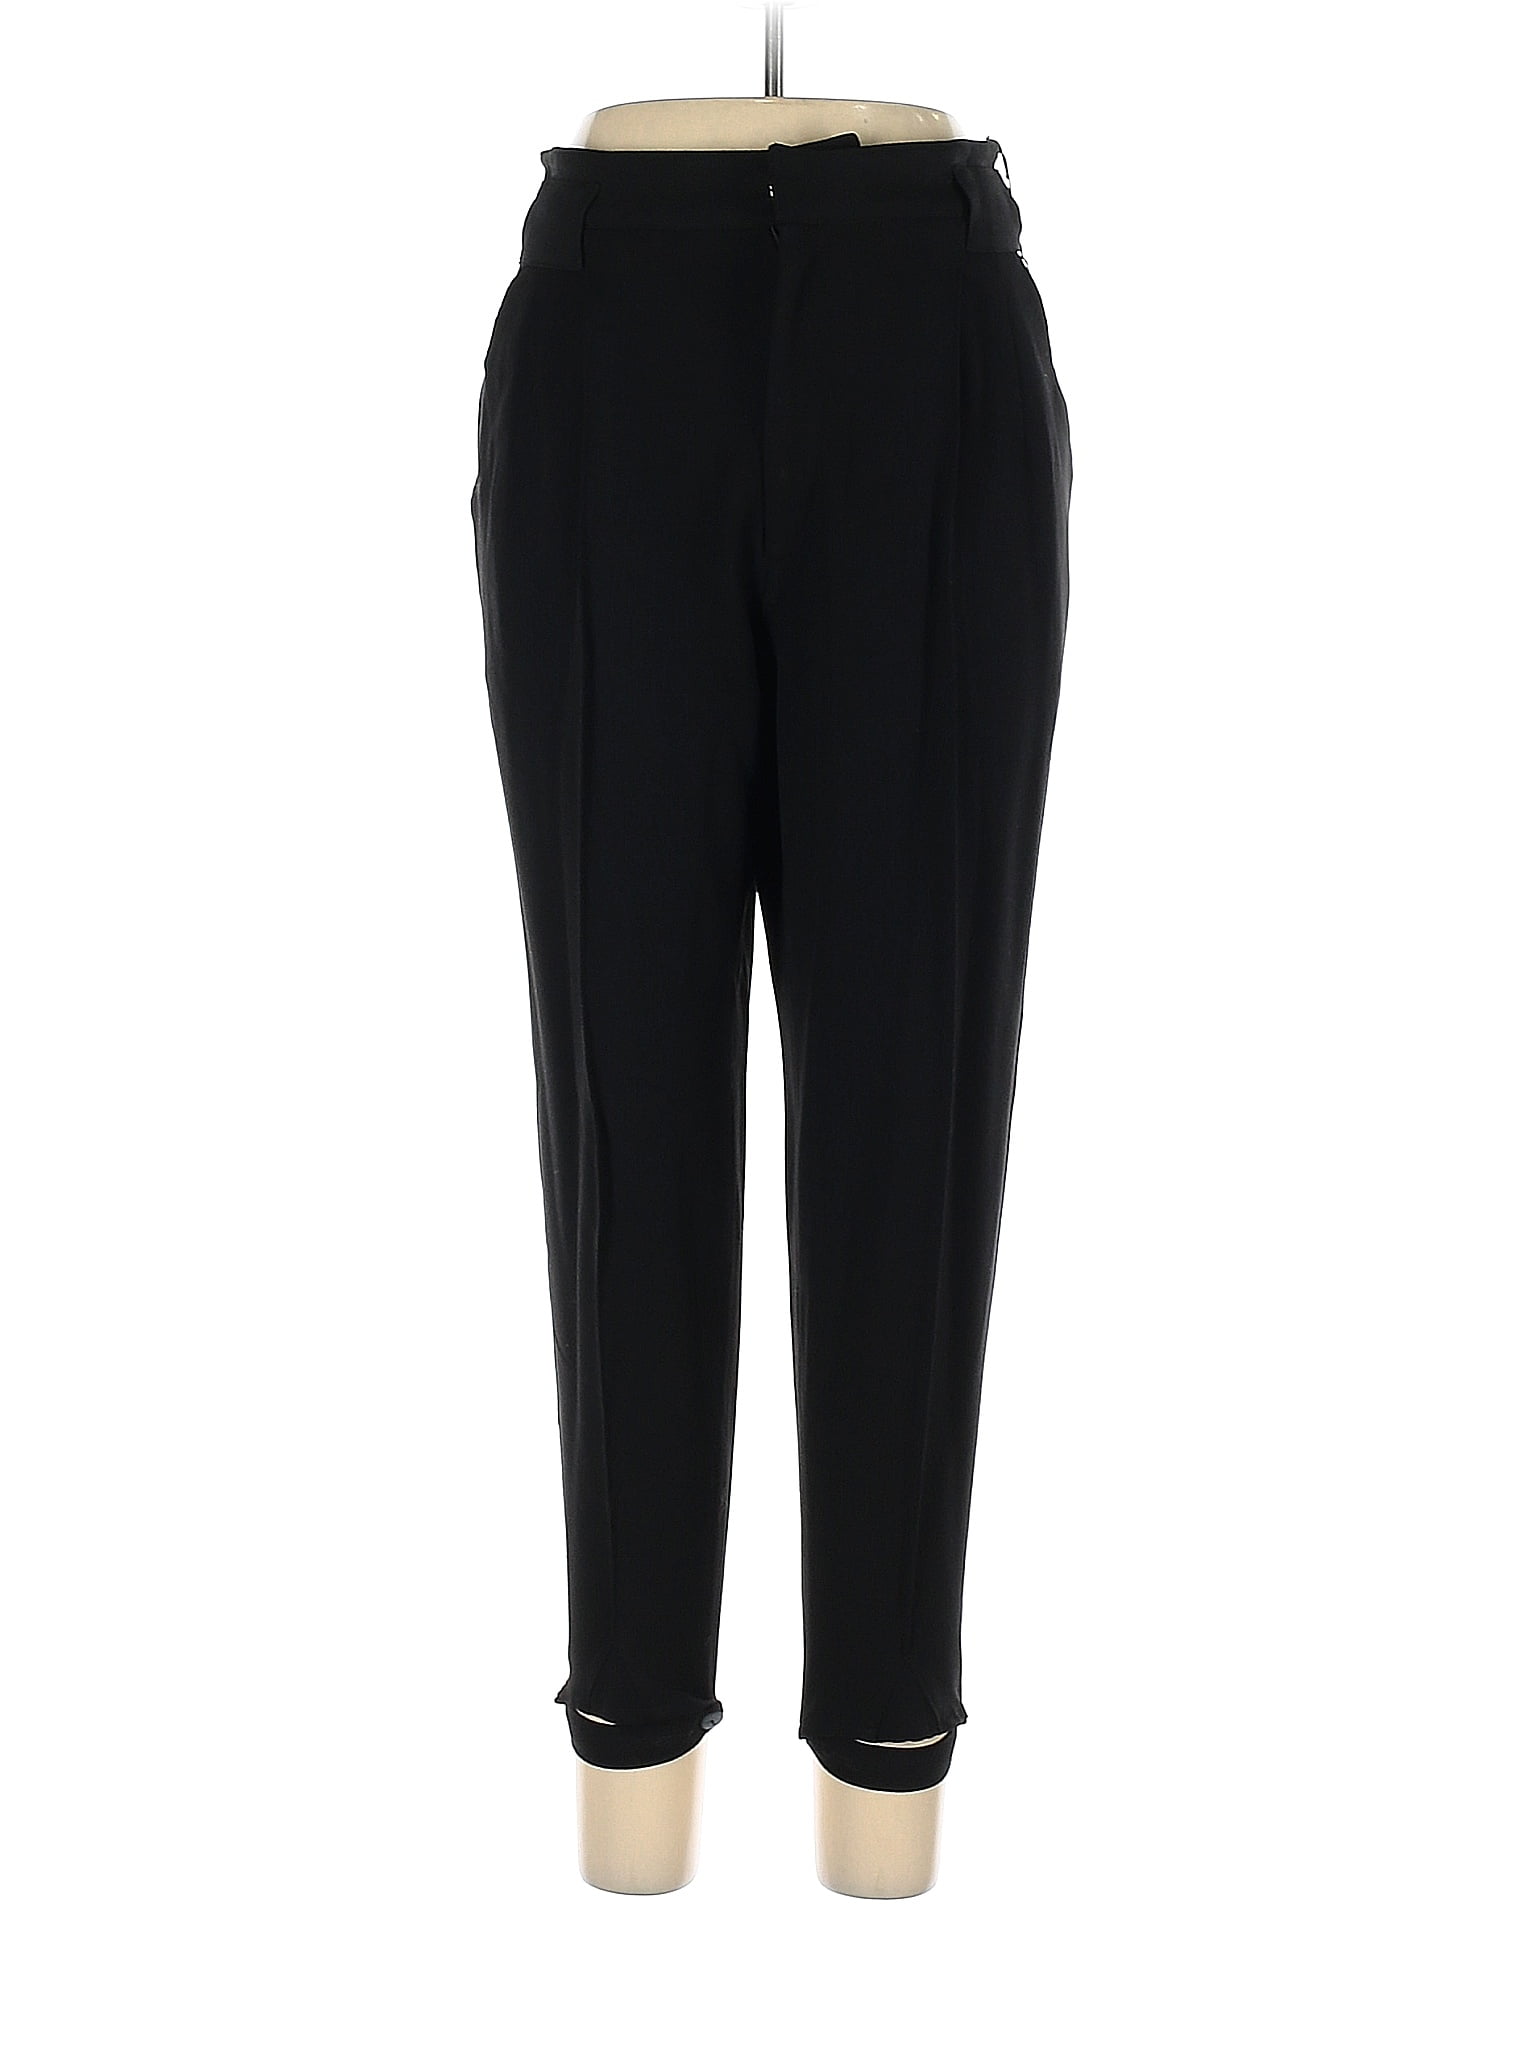 Company Ellen Tracy Black Dress Pants Size 12 - 72% off | thredUP